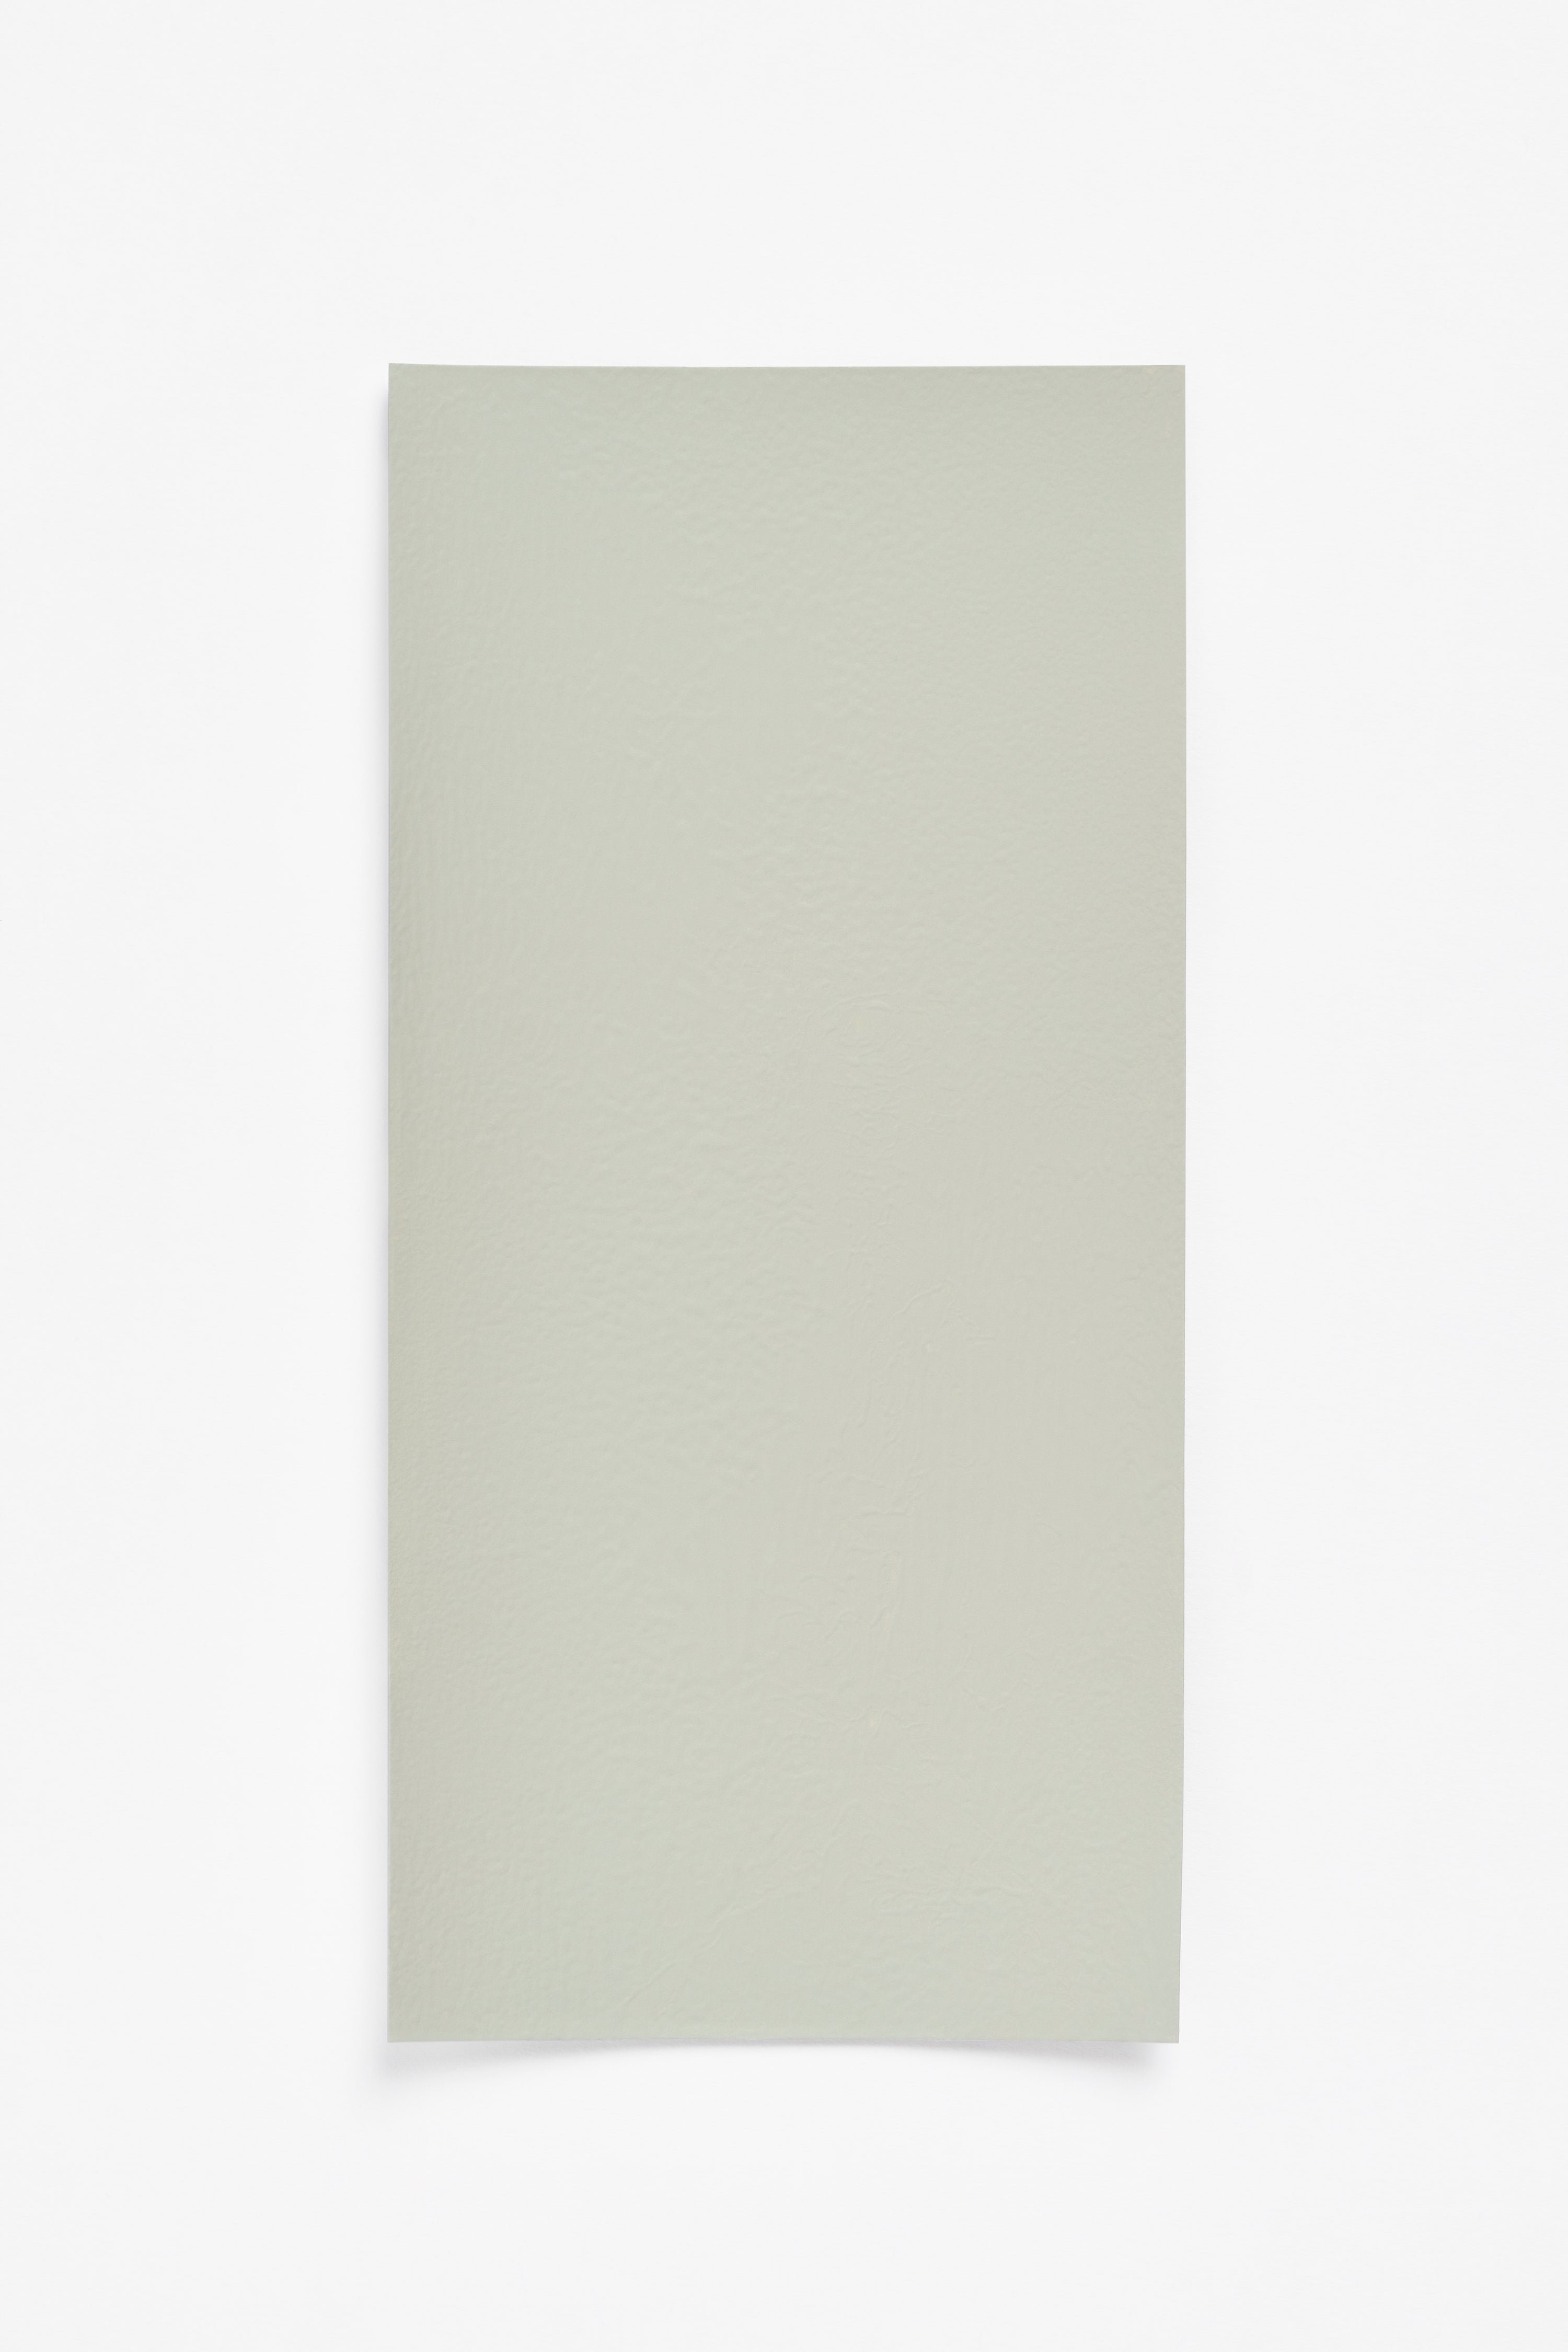 Pale Umbre — a paint colour developed by Barber Osgerby for Blēo